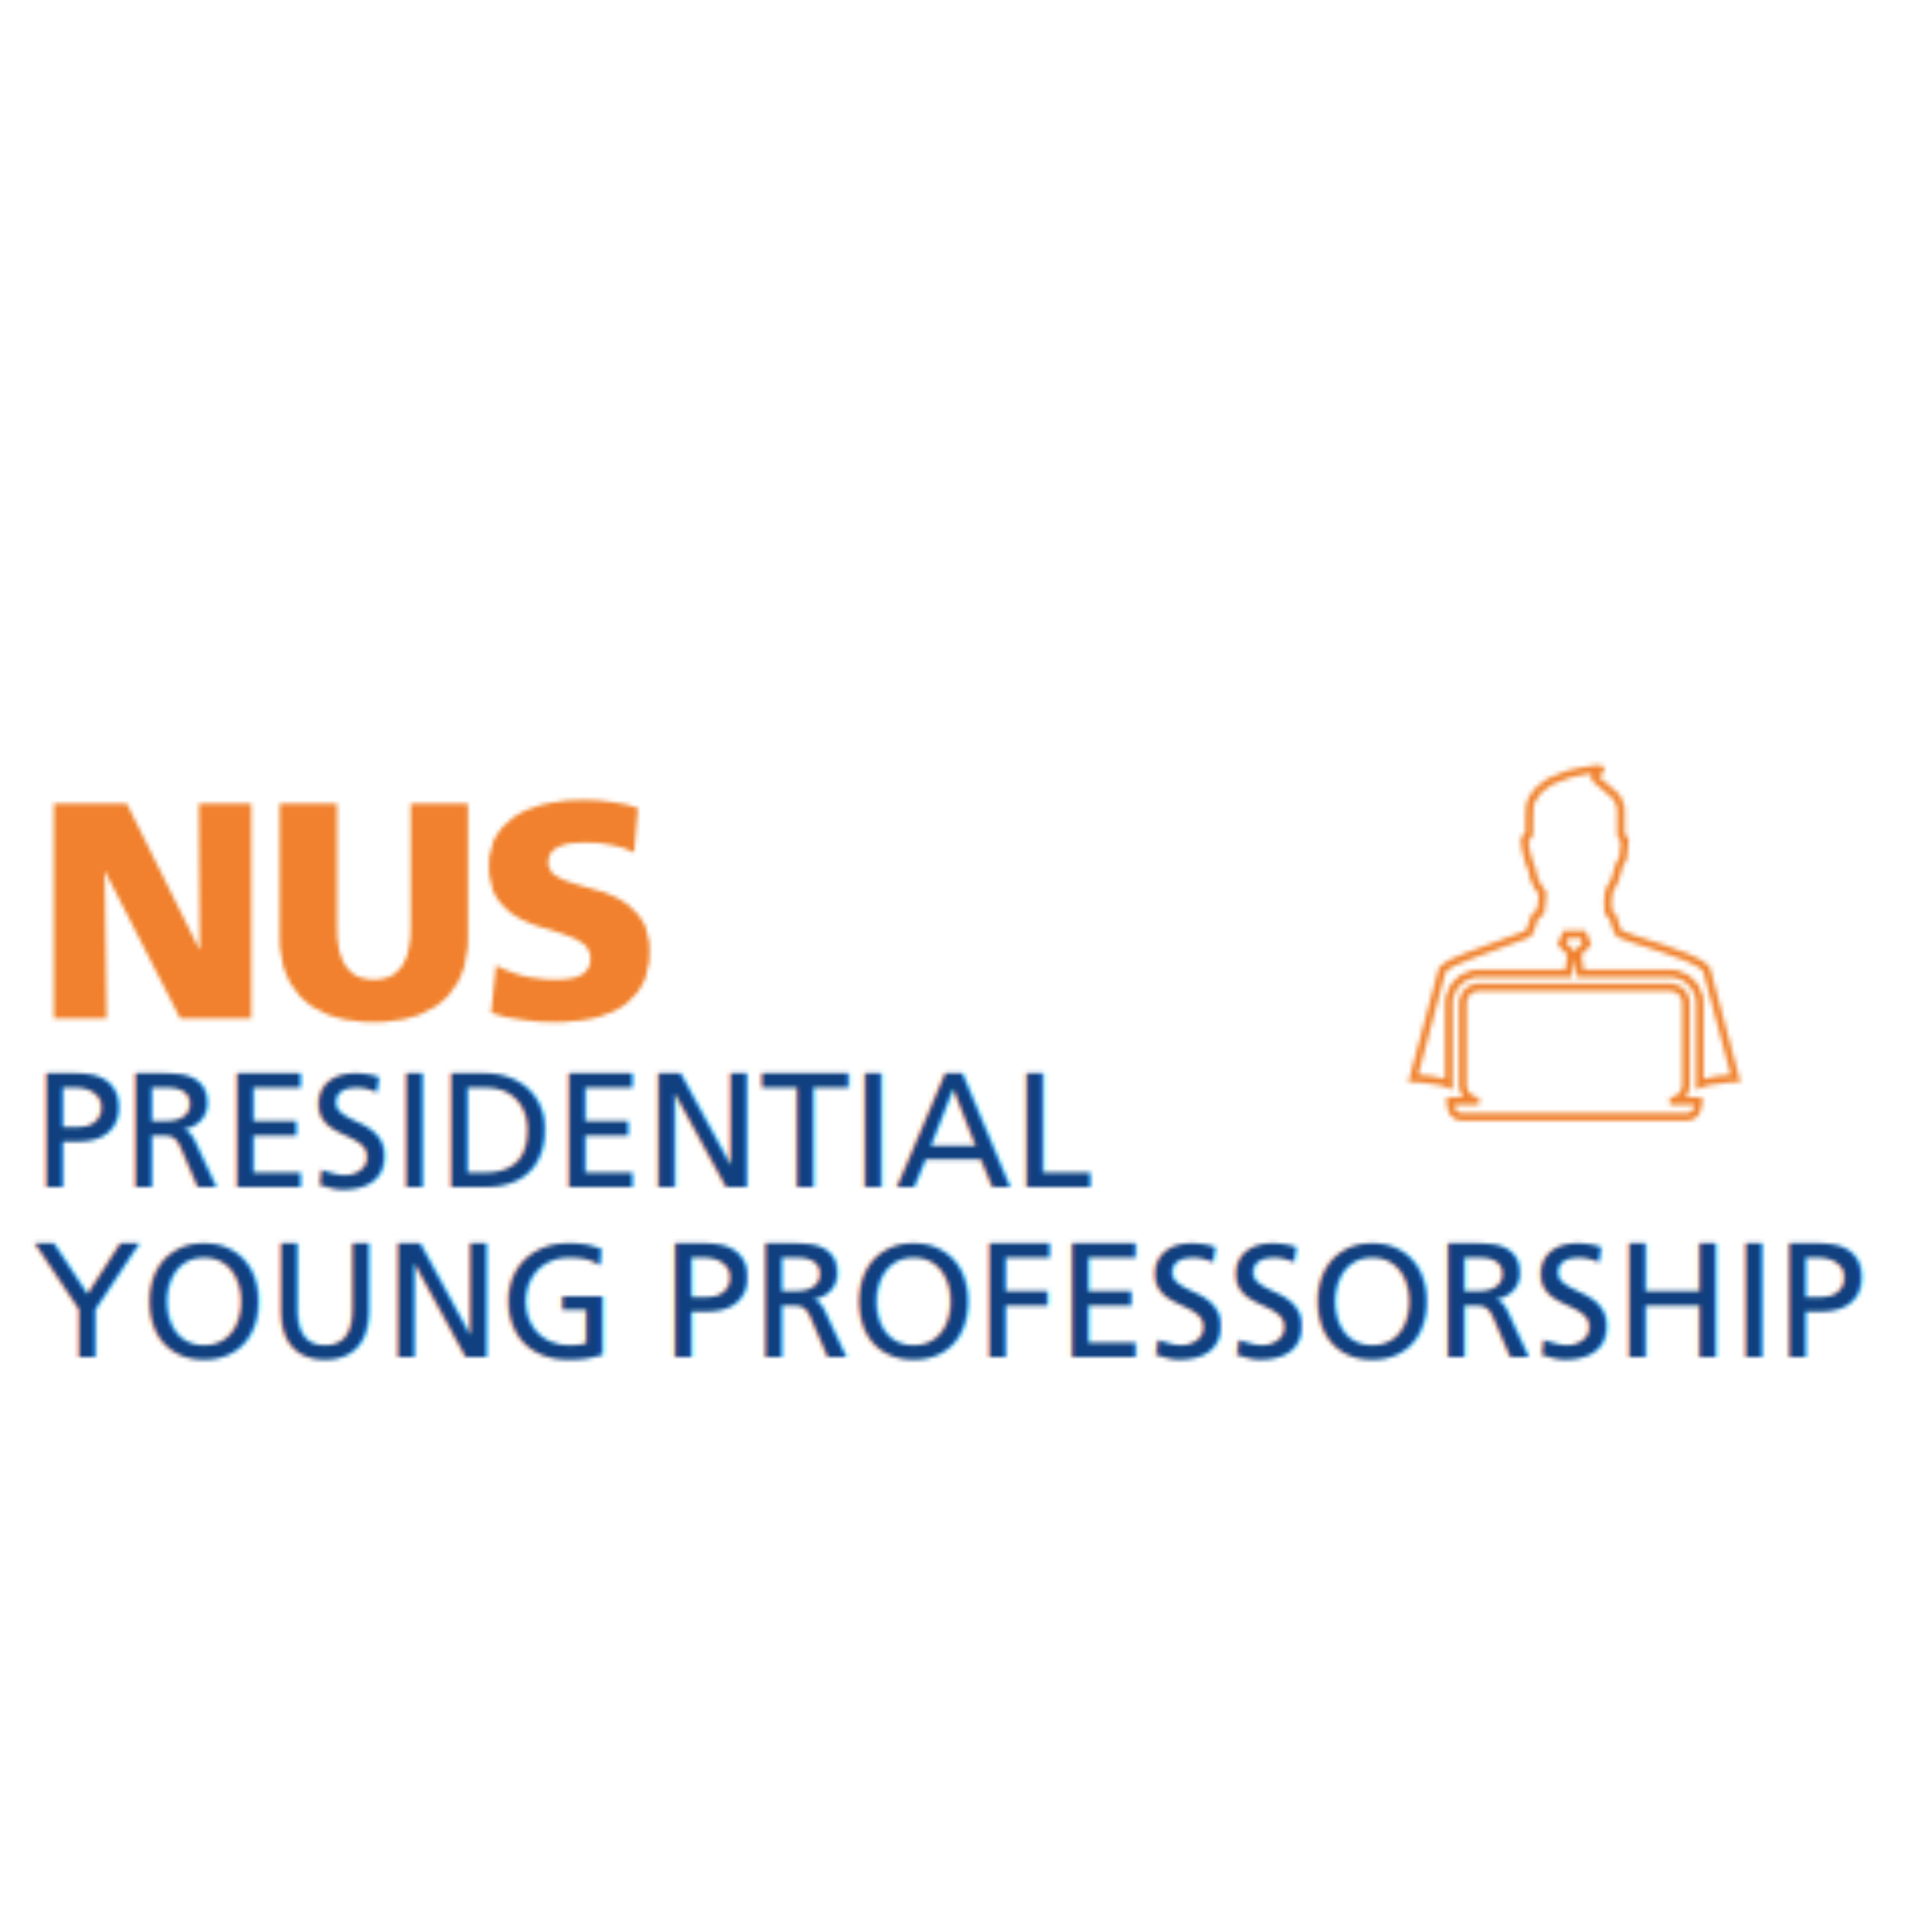 Nus Presidential Young Professorship Scheme